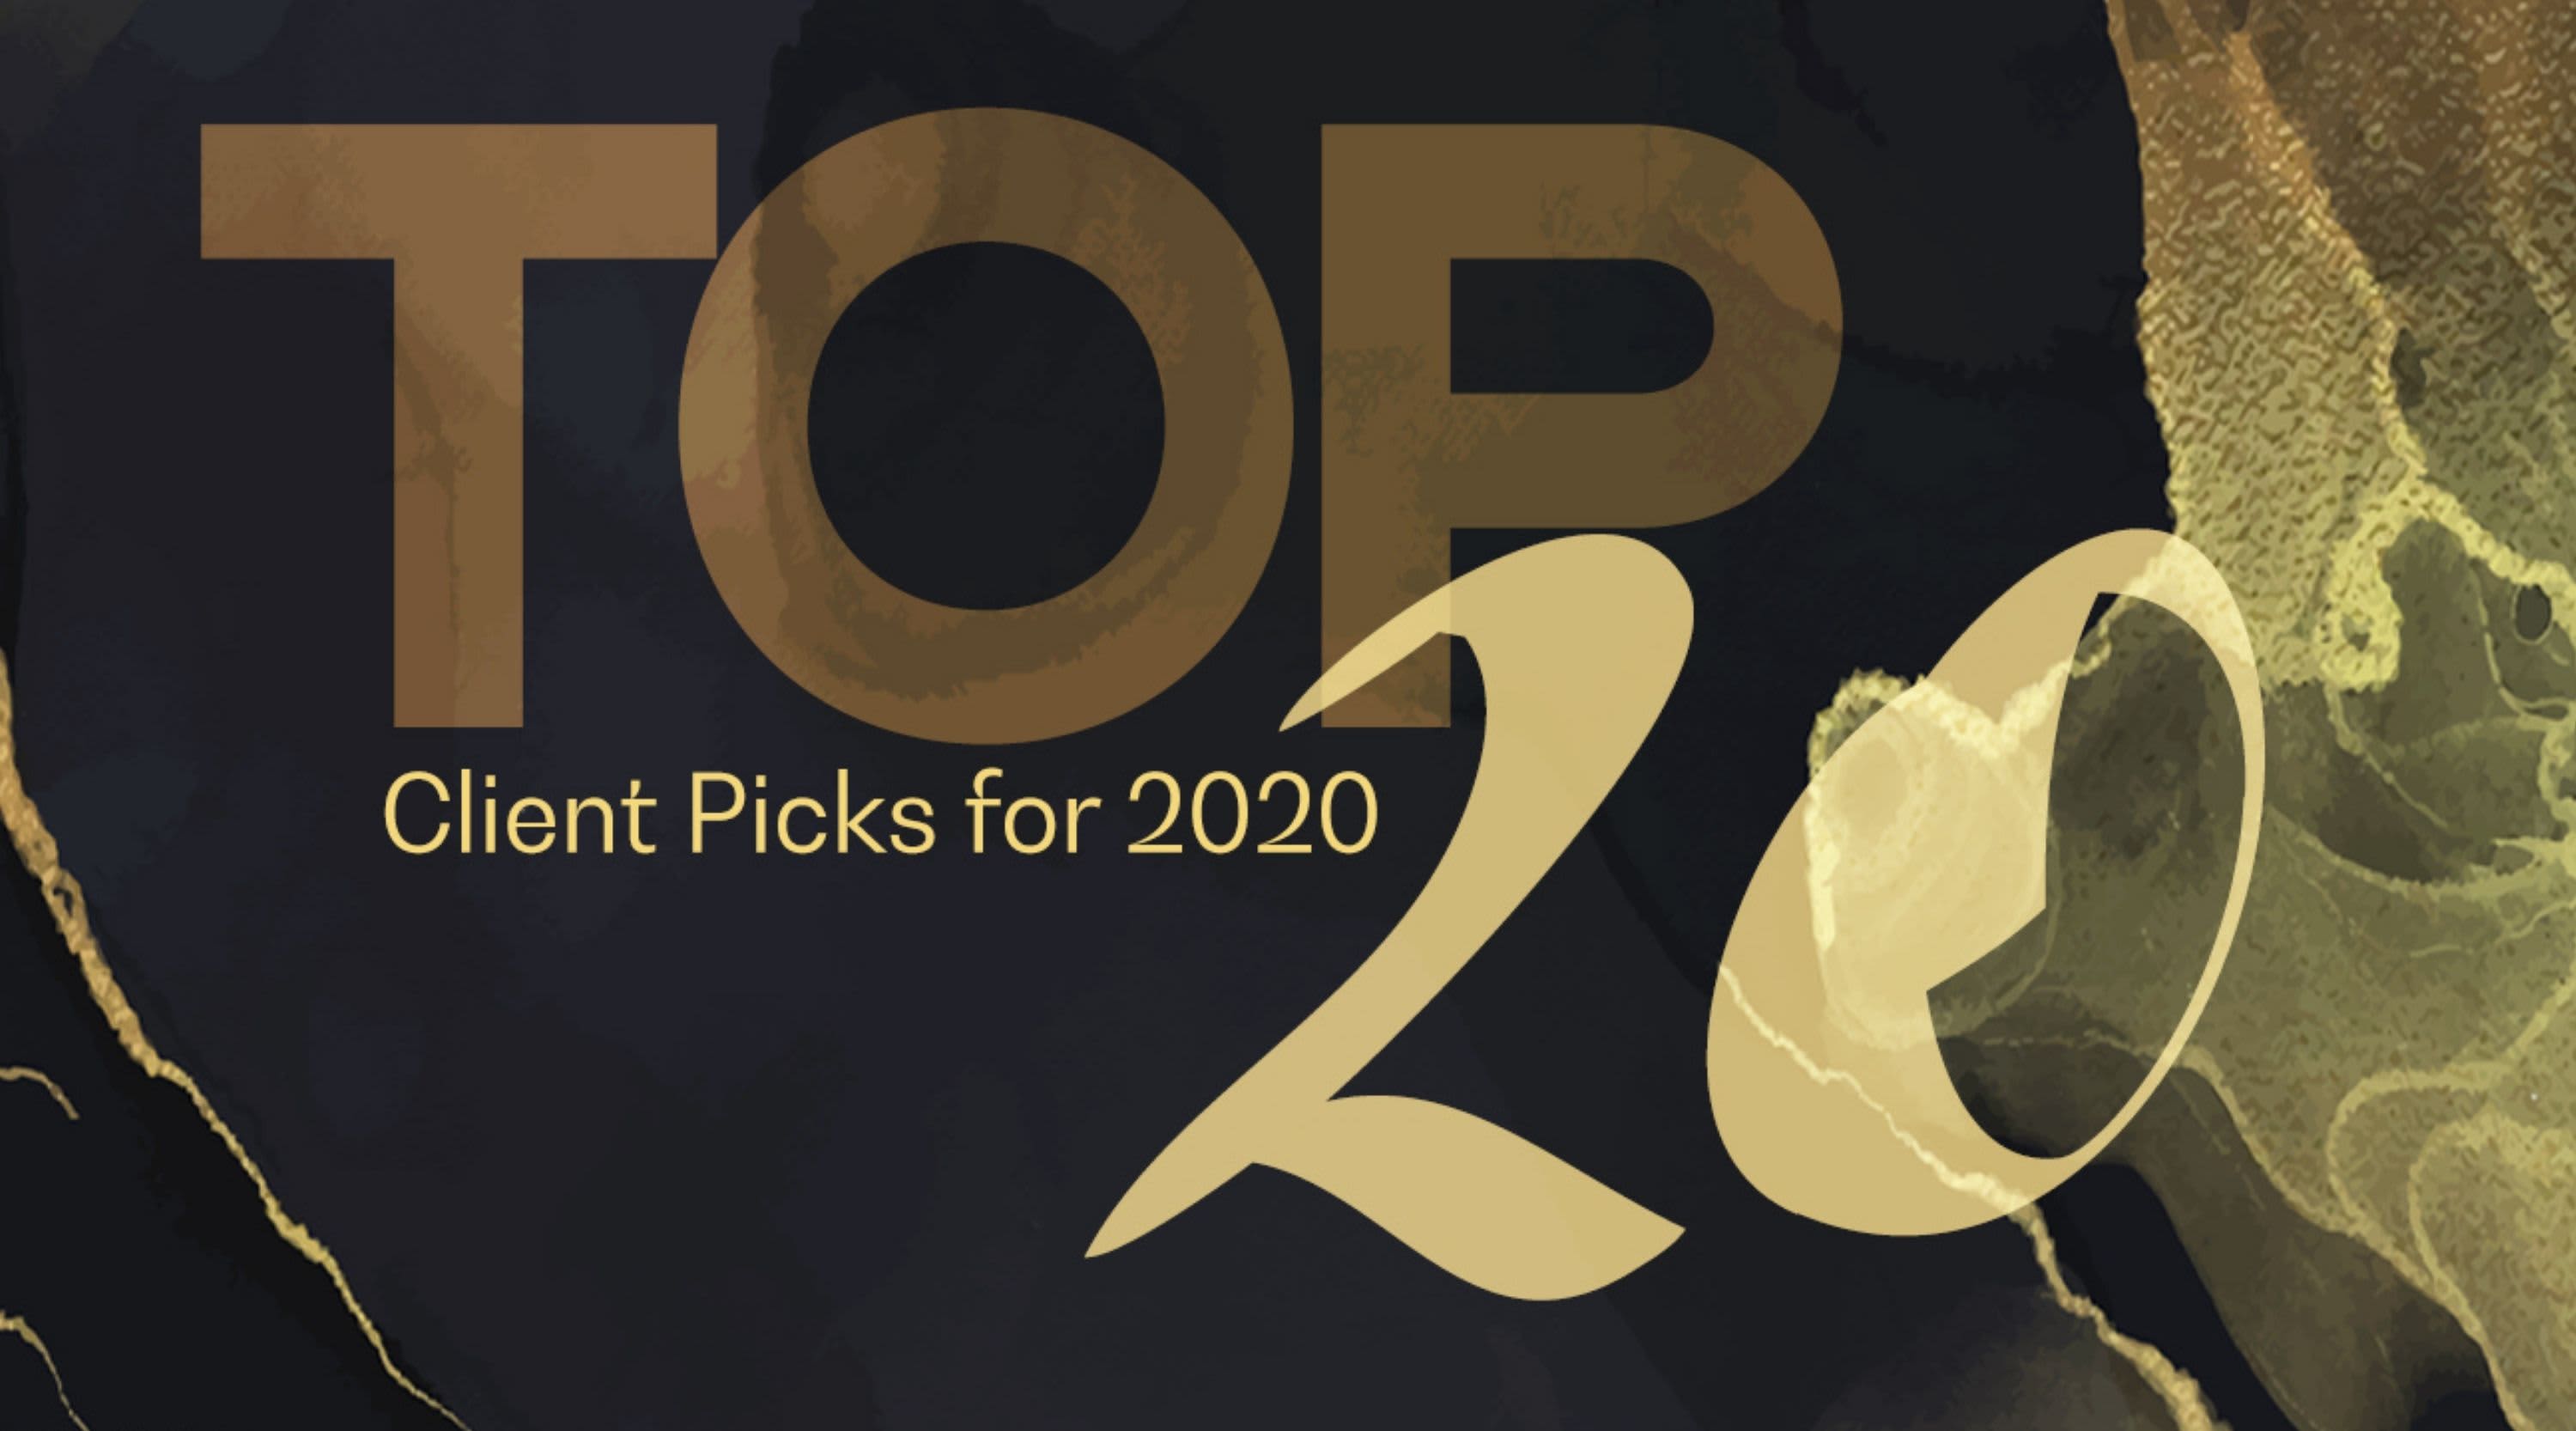 Top 20 of 2020